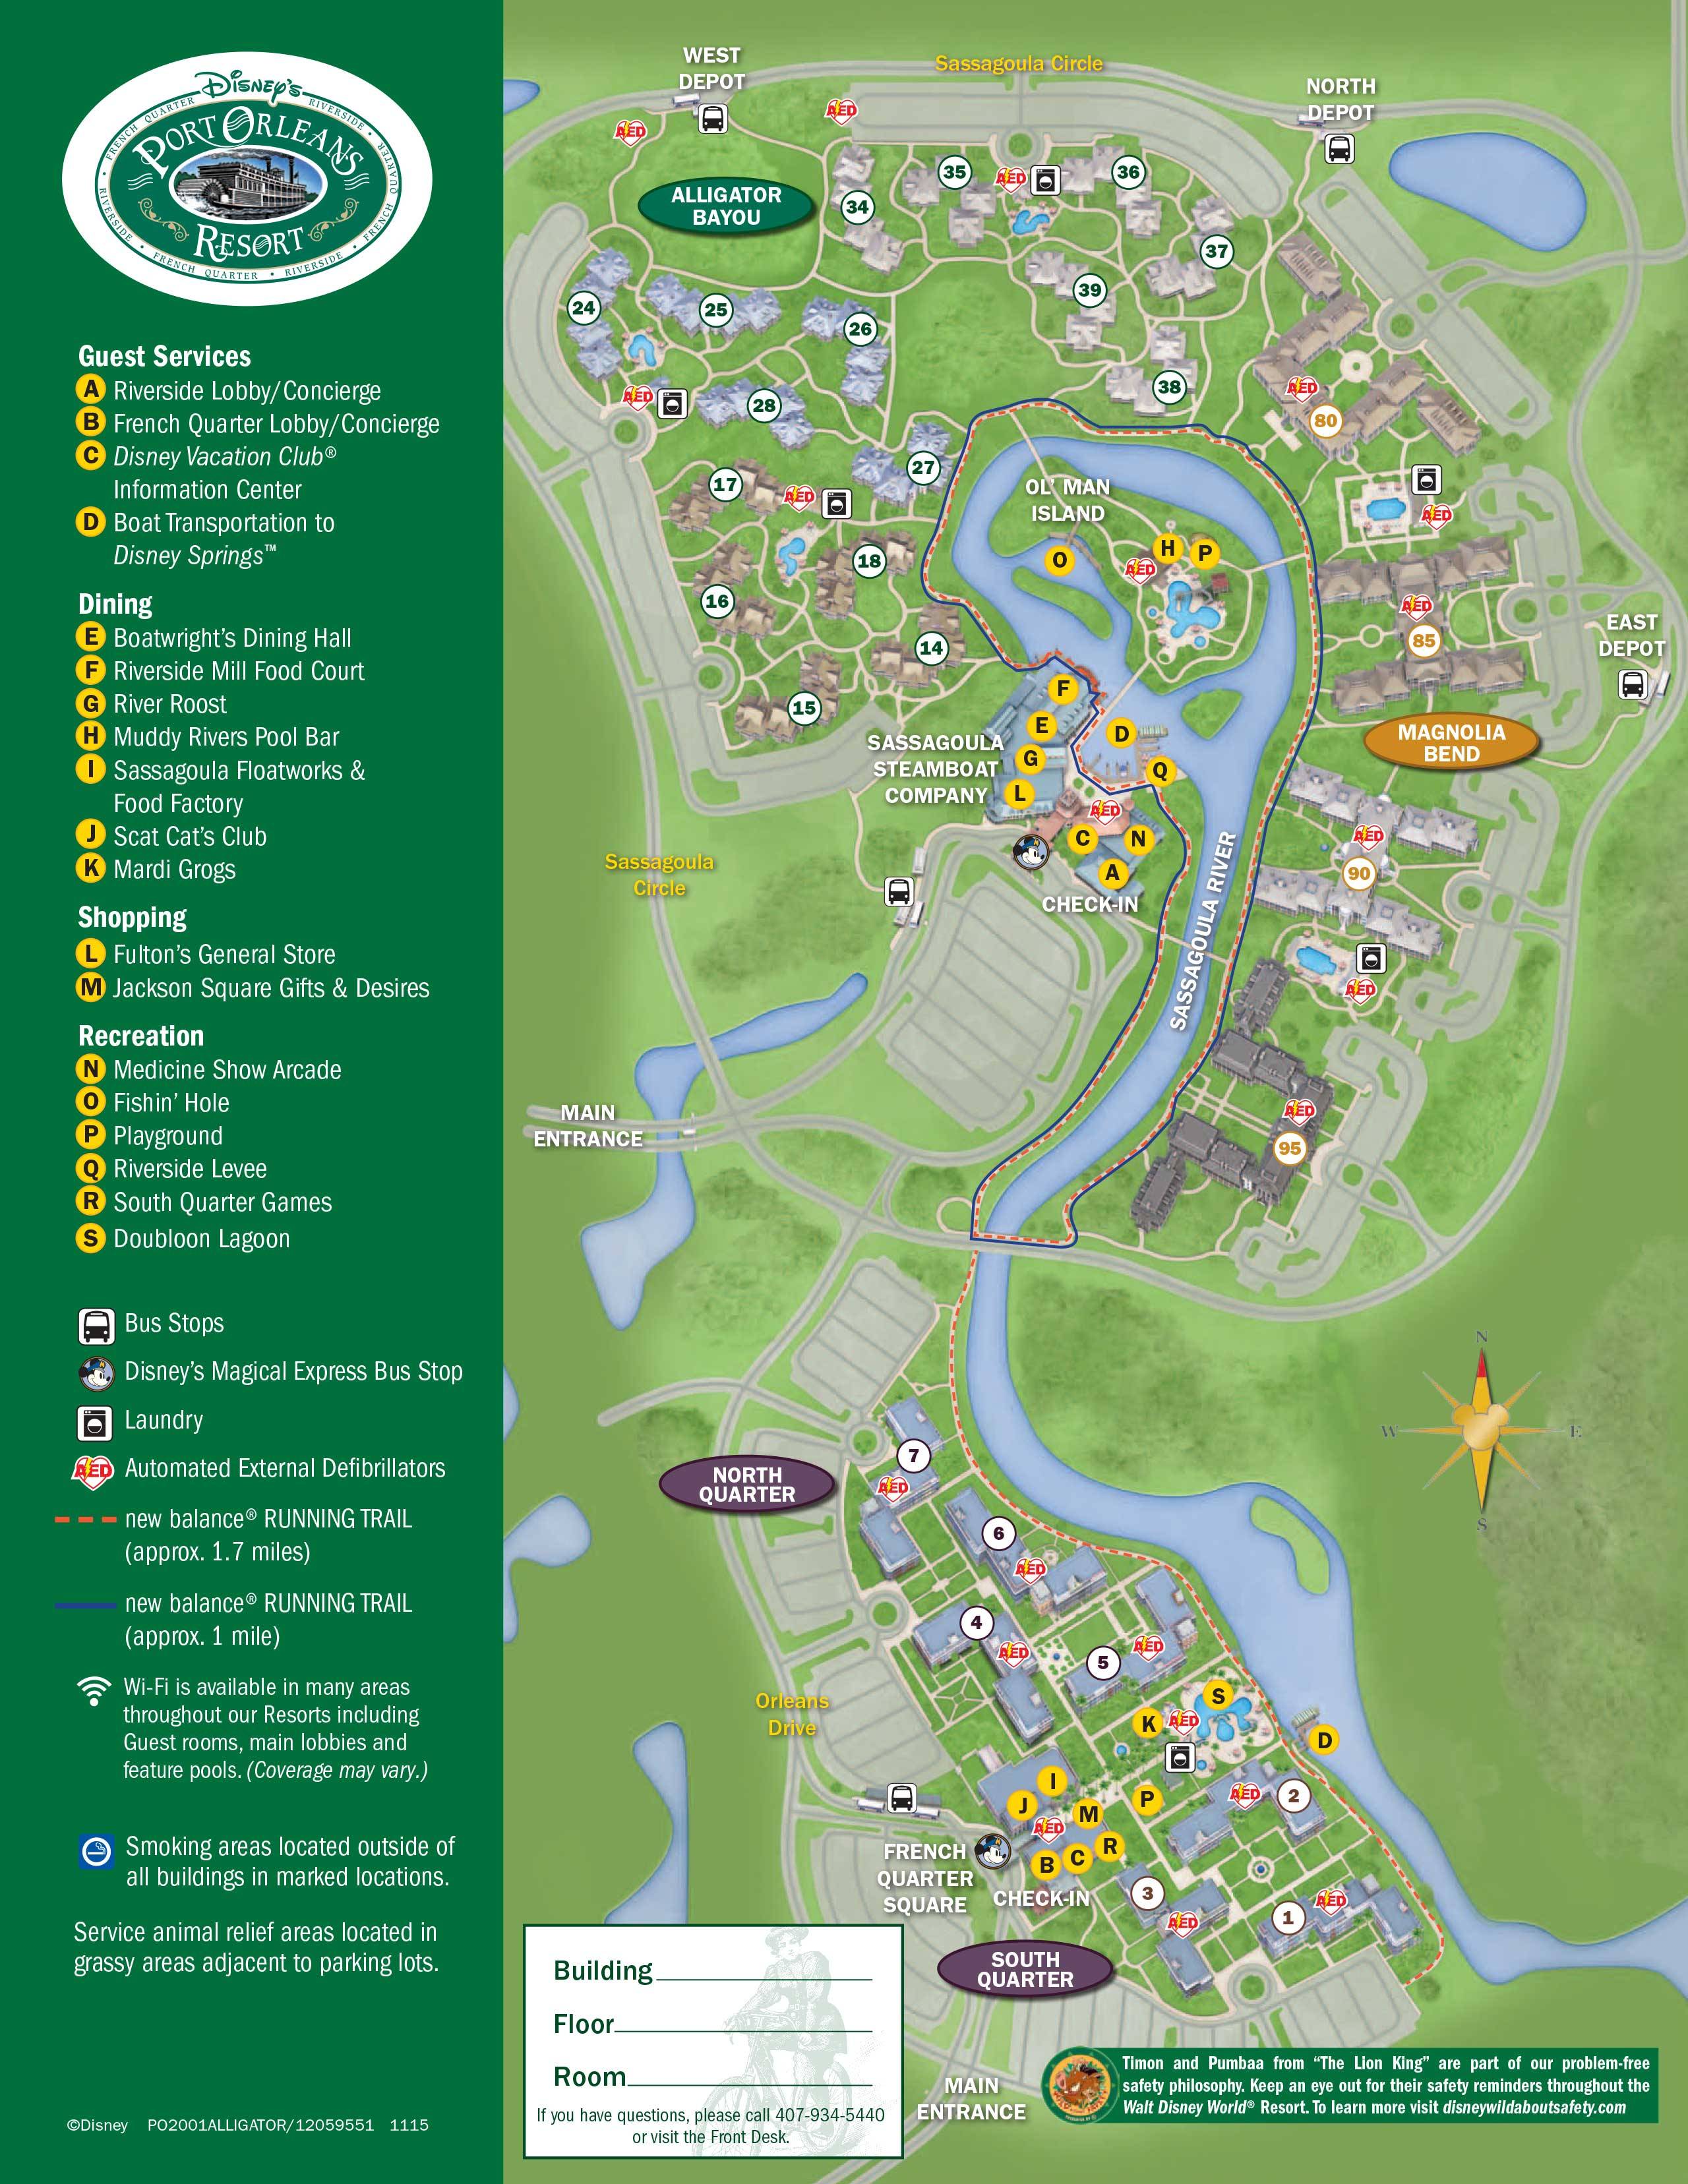 Disney's Port Orleans Resort map